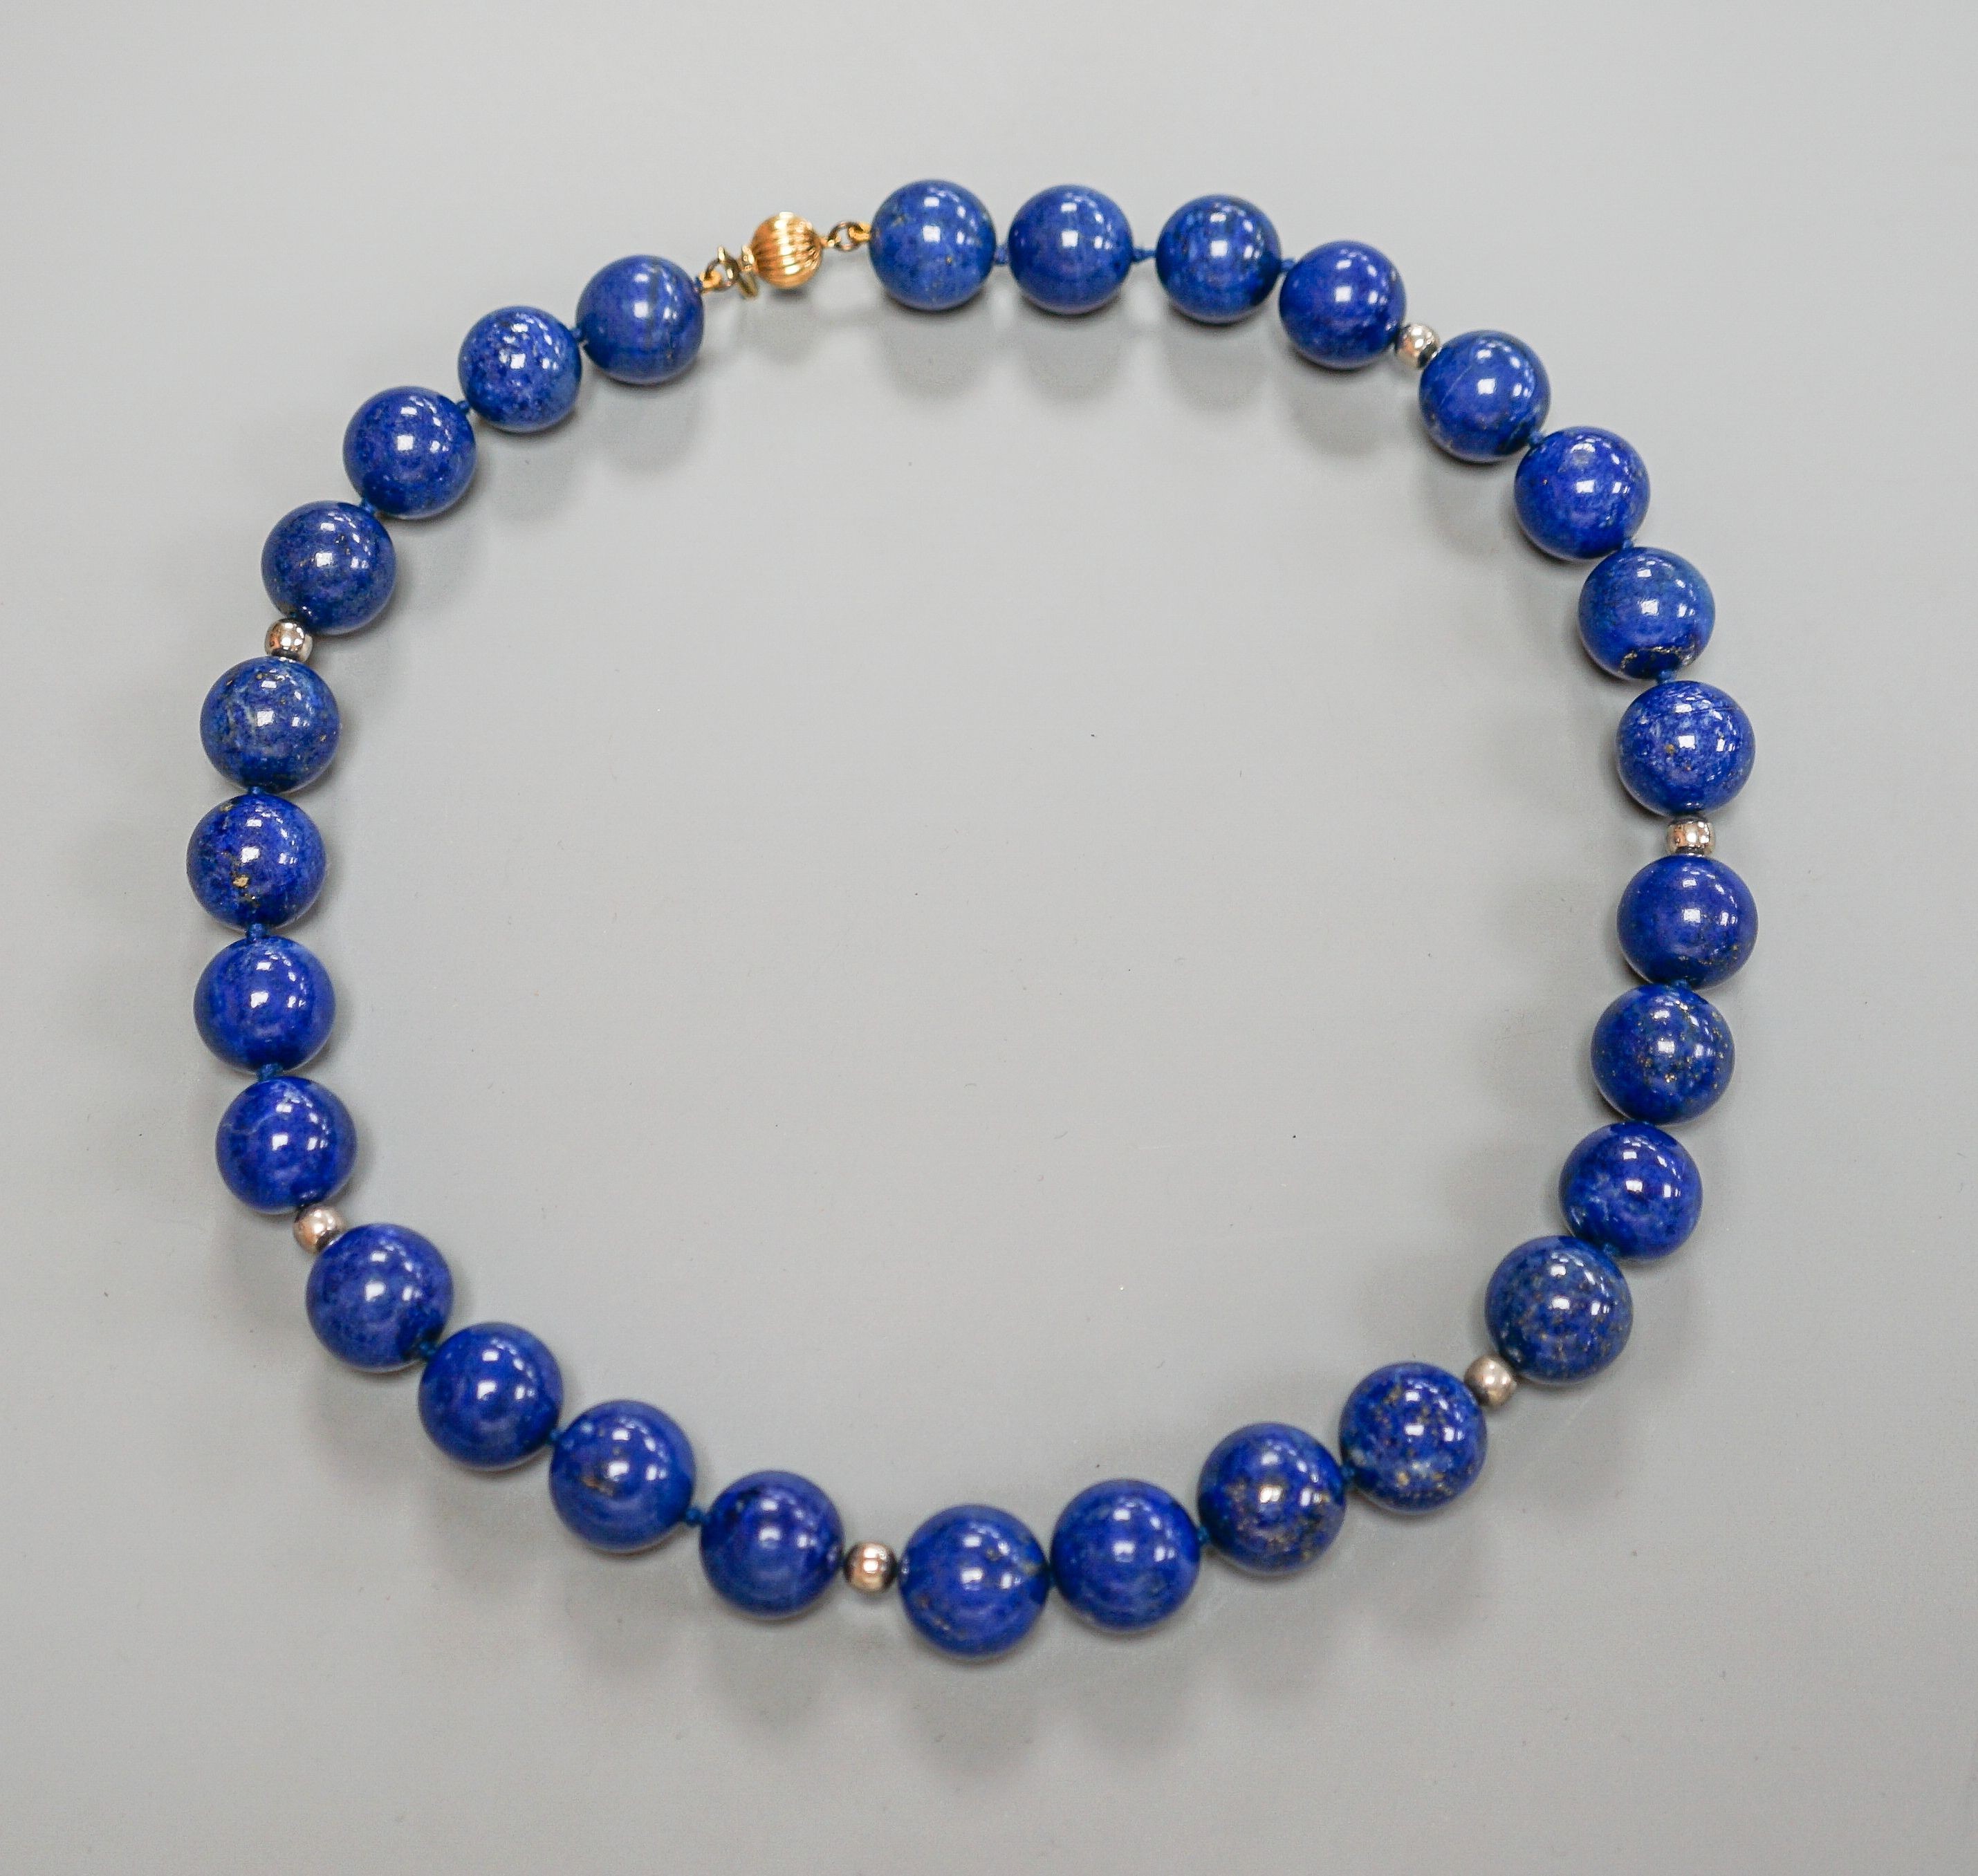 A single strand lapis lazuli circular bead necklace, with 375 clasp, 44cm.